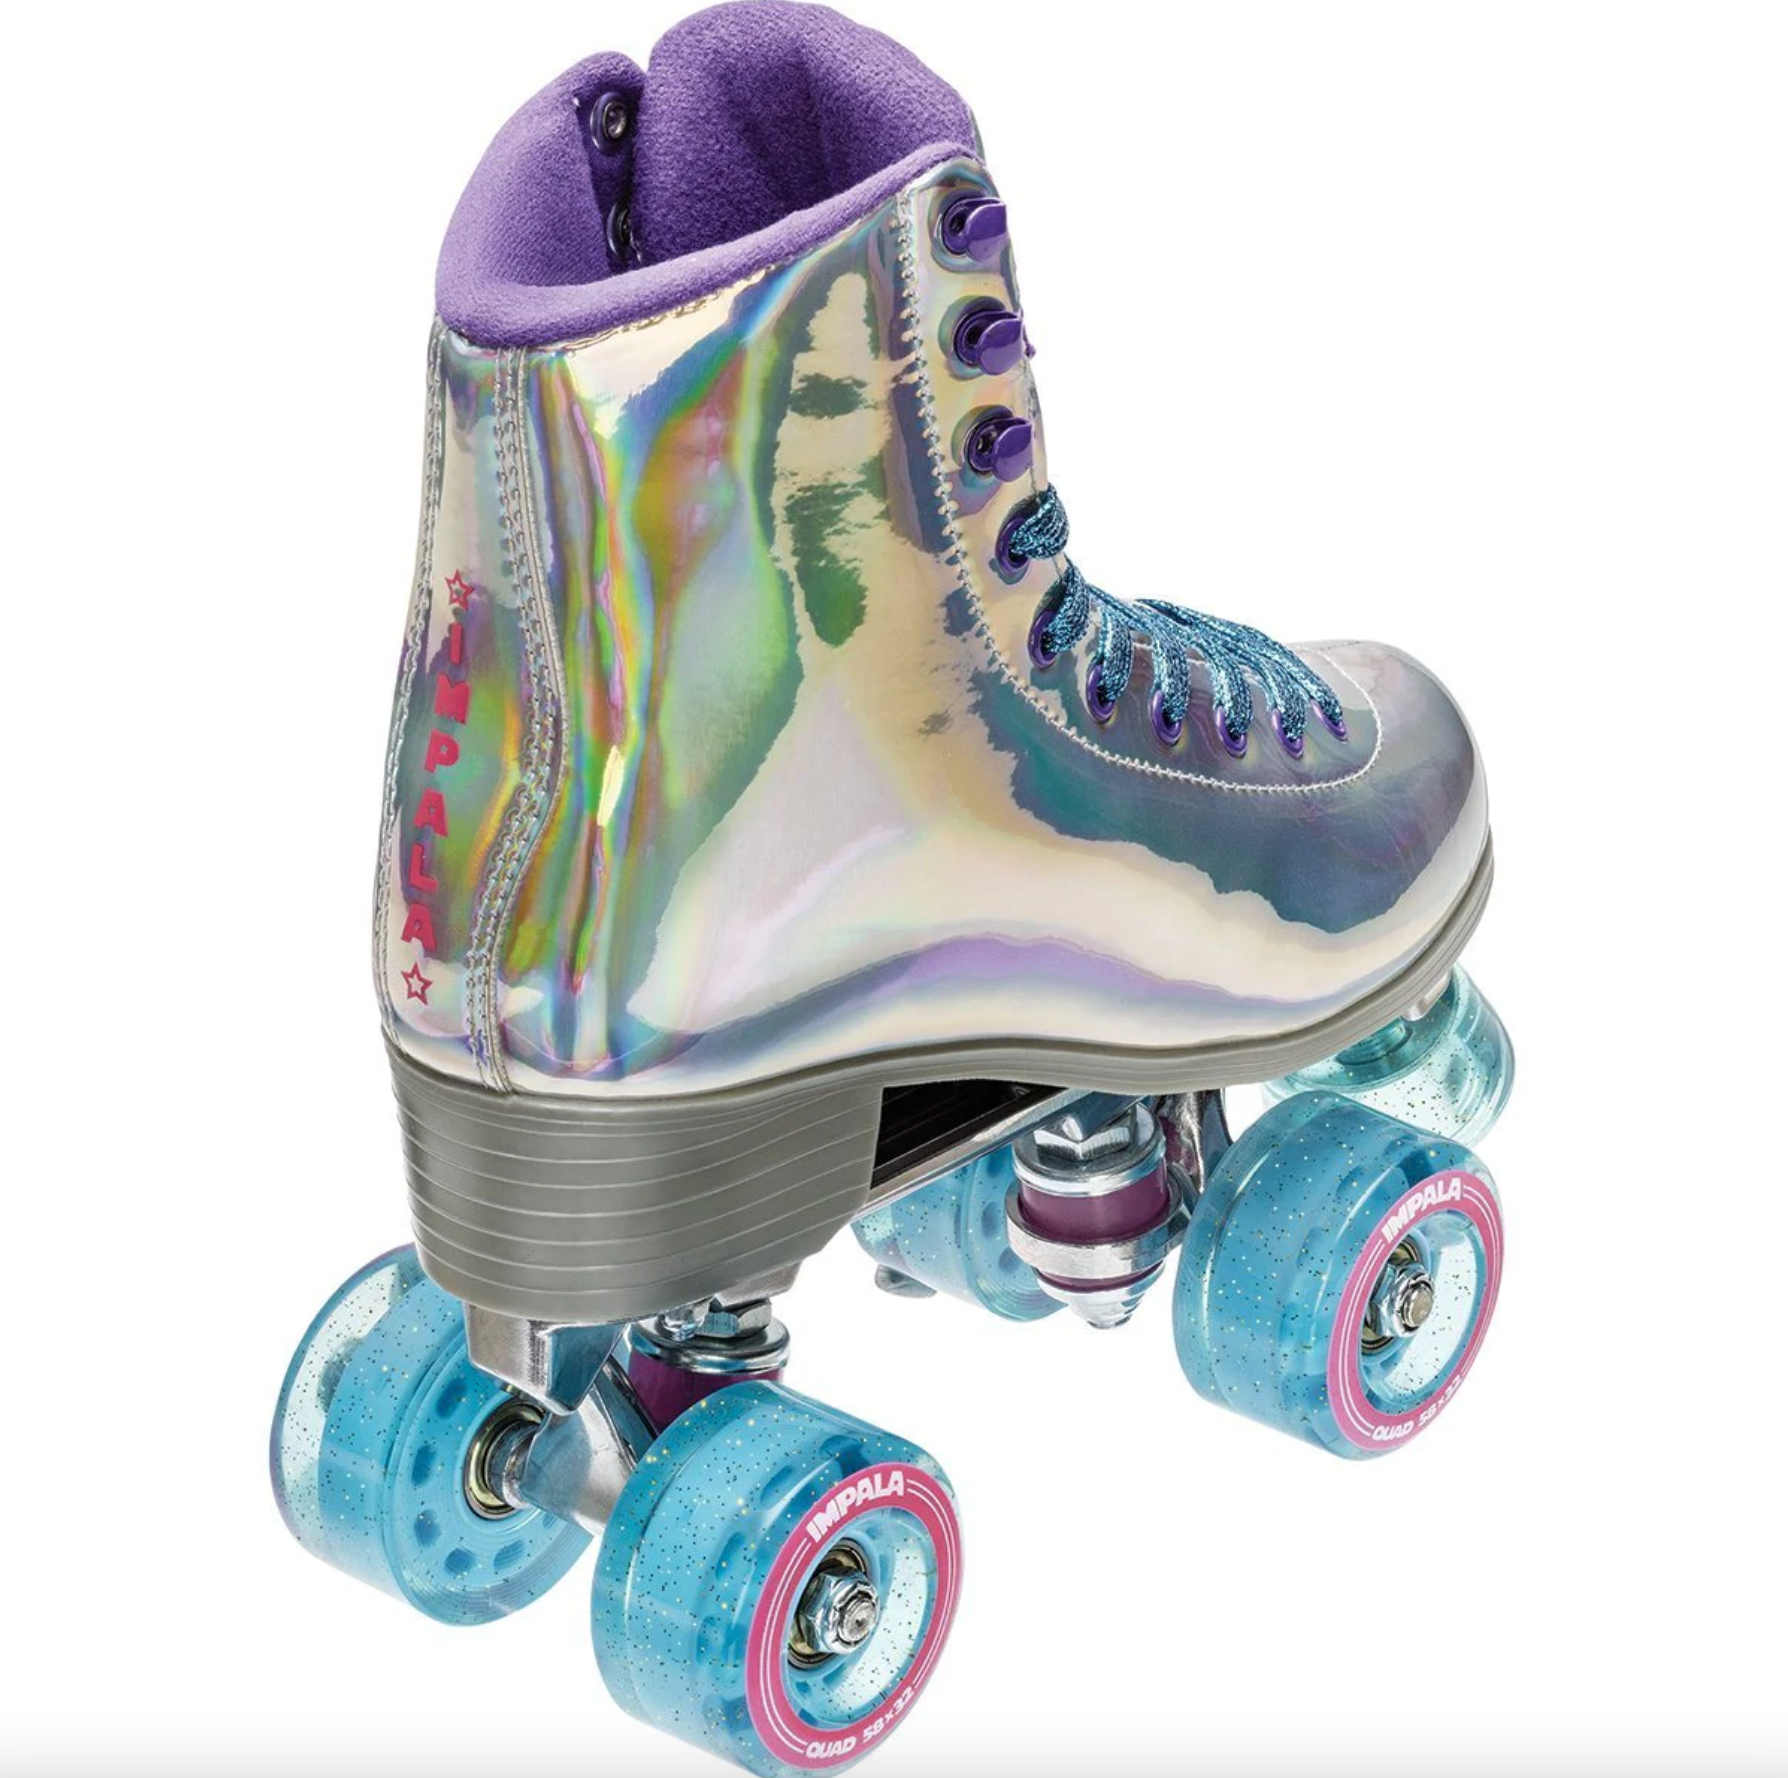 Impala Holographic roller skates